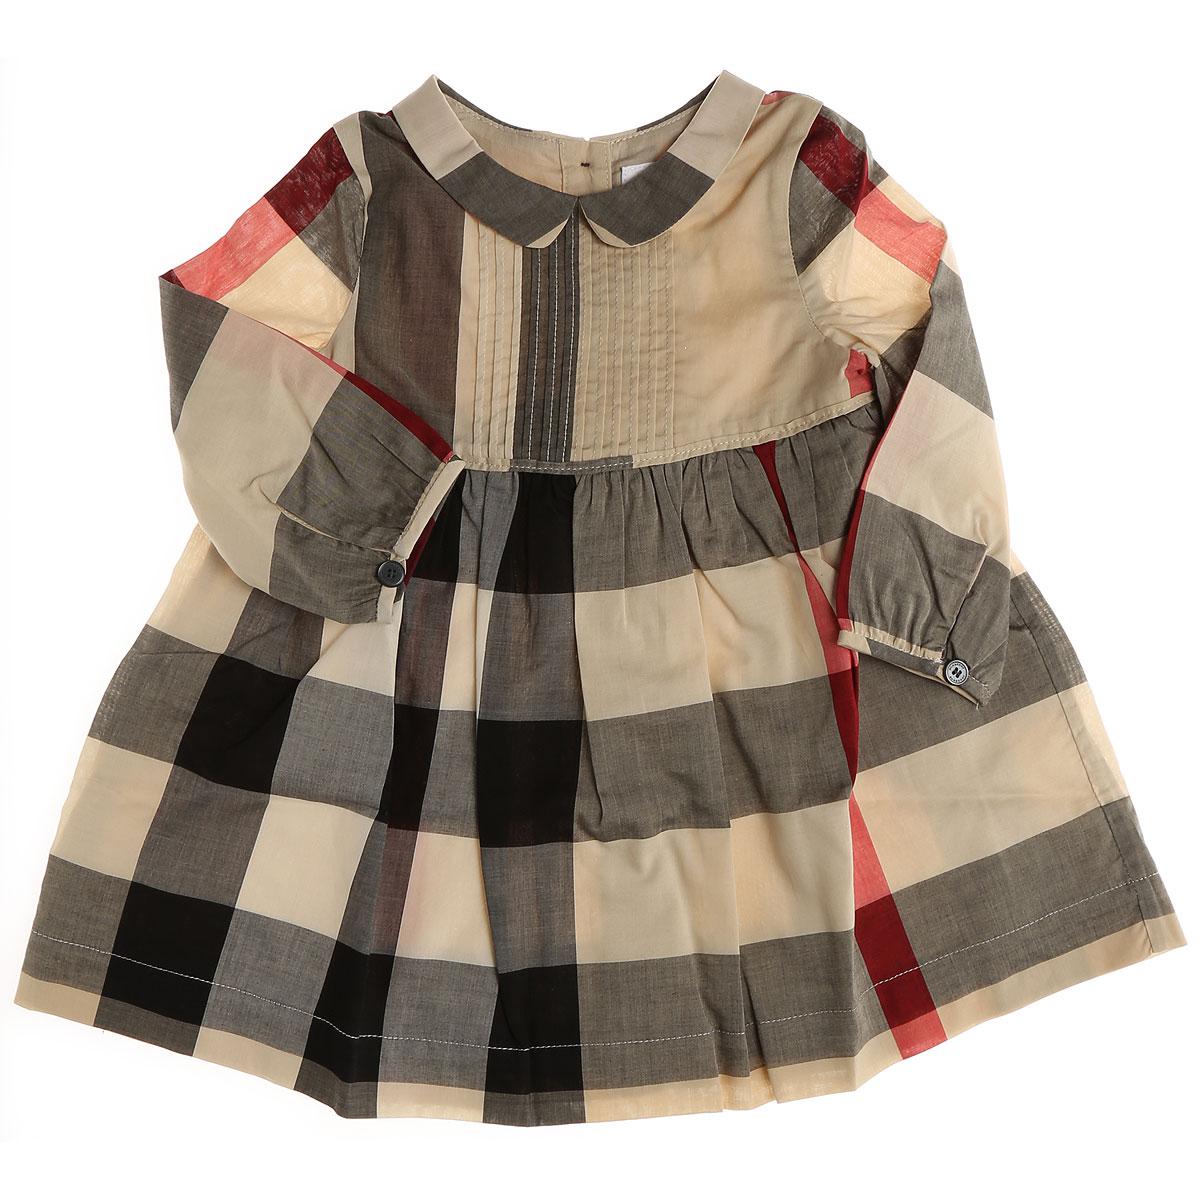 burberry baby dress sale